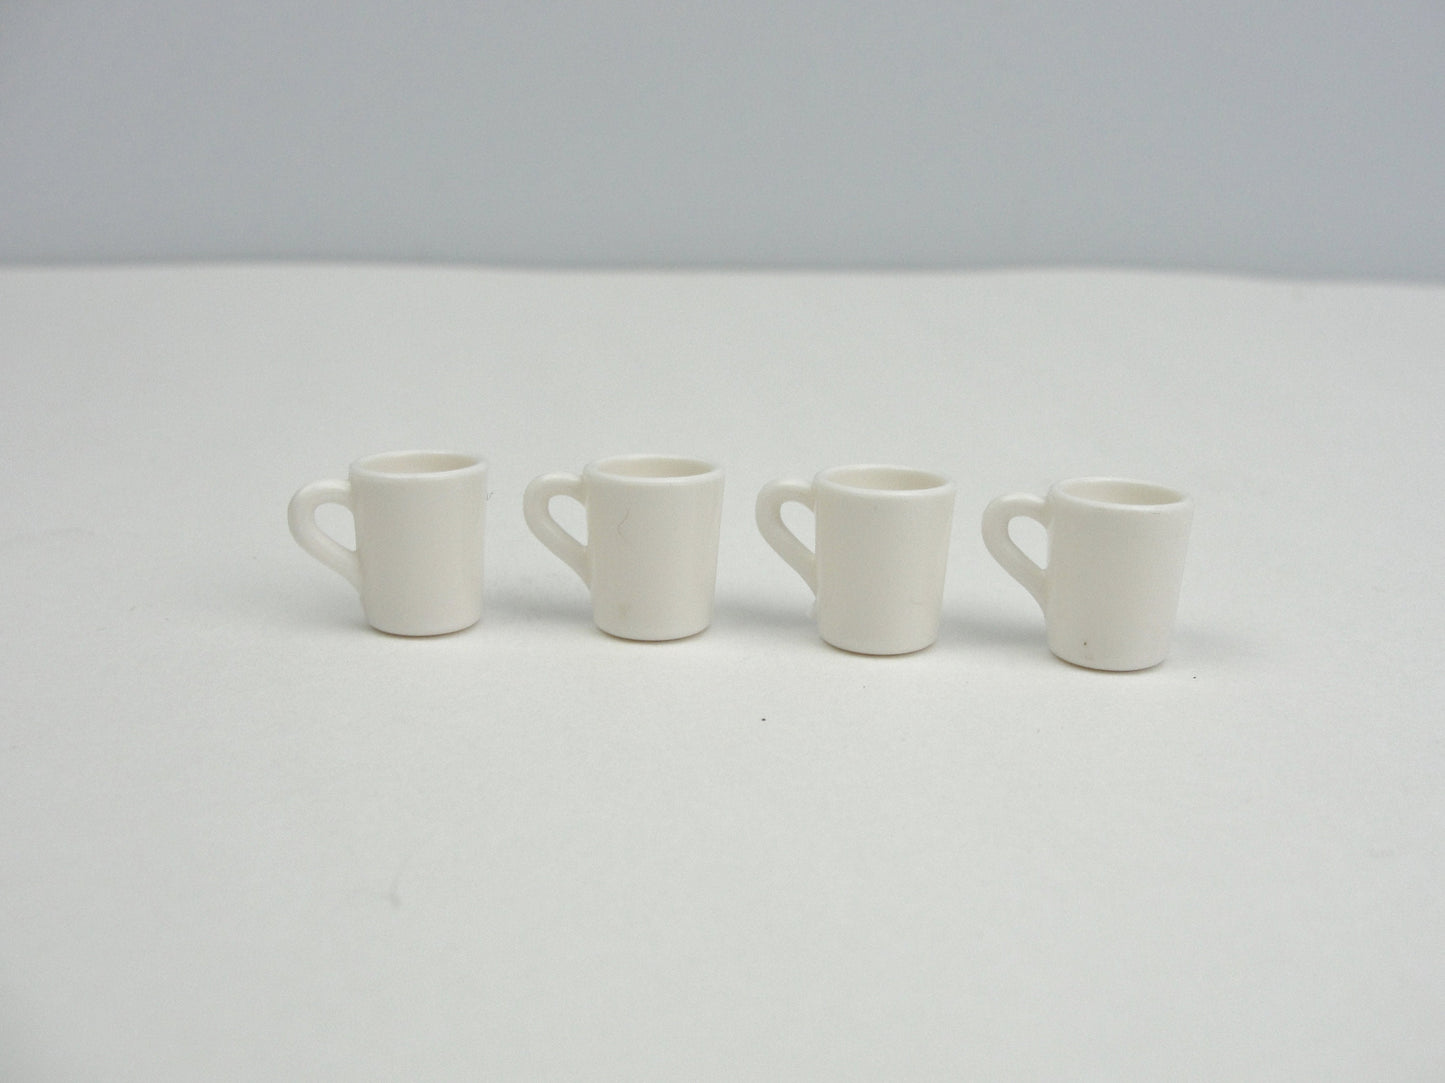 Dollhouse miniature white mugs (empty) set of 4